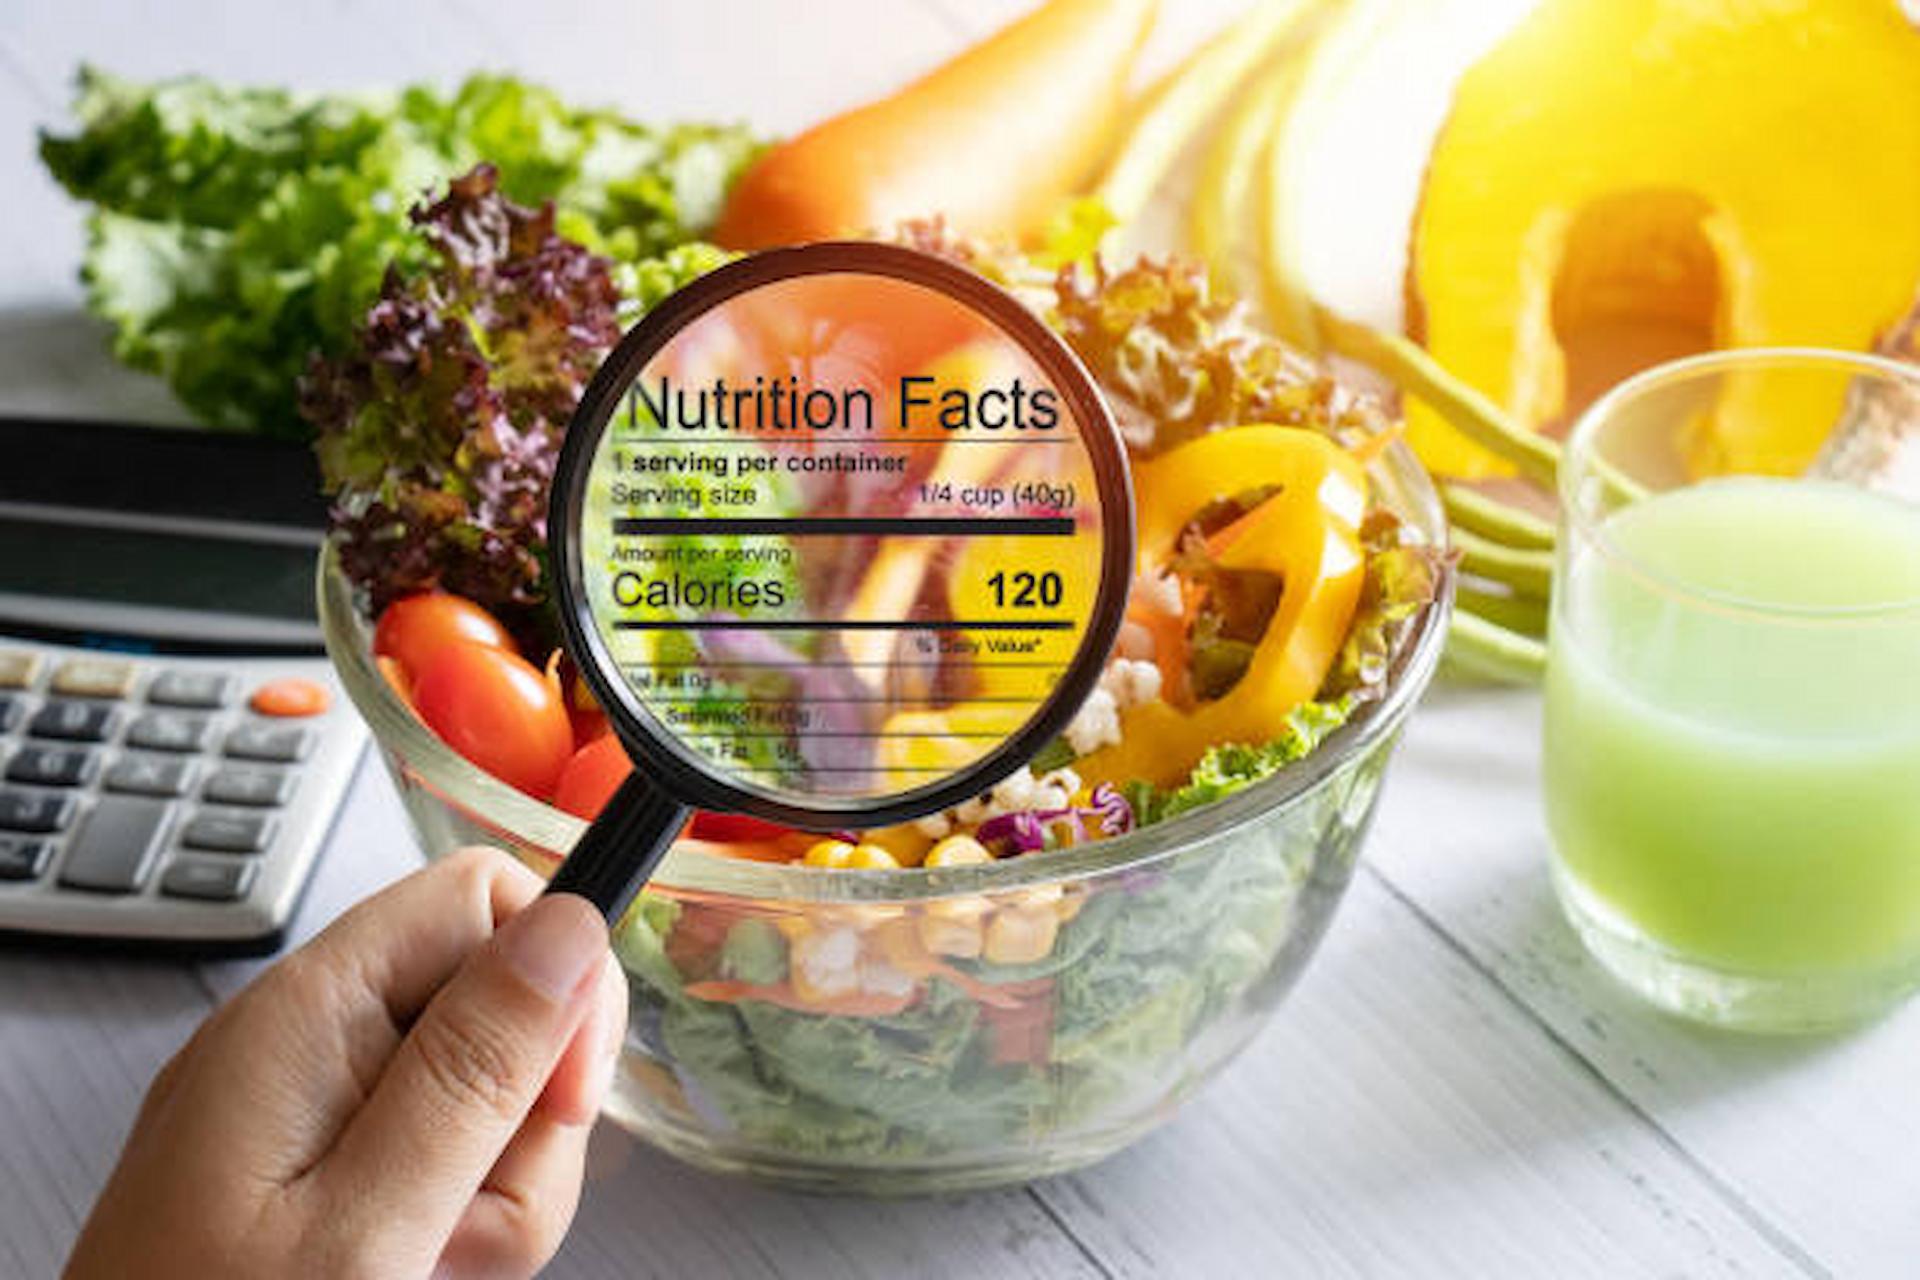 Understanding Food Labels: Decoding Nutritional Information for Better Health